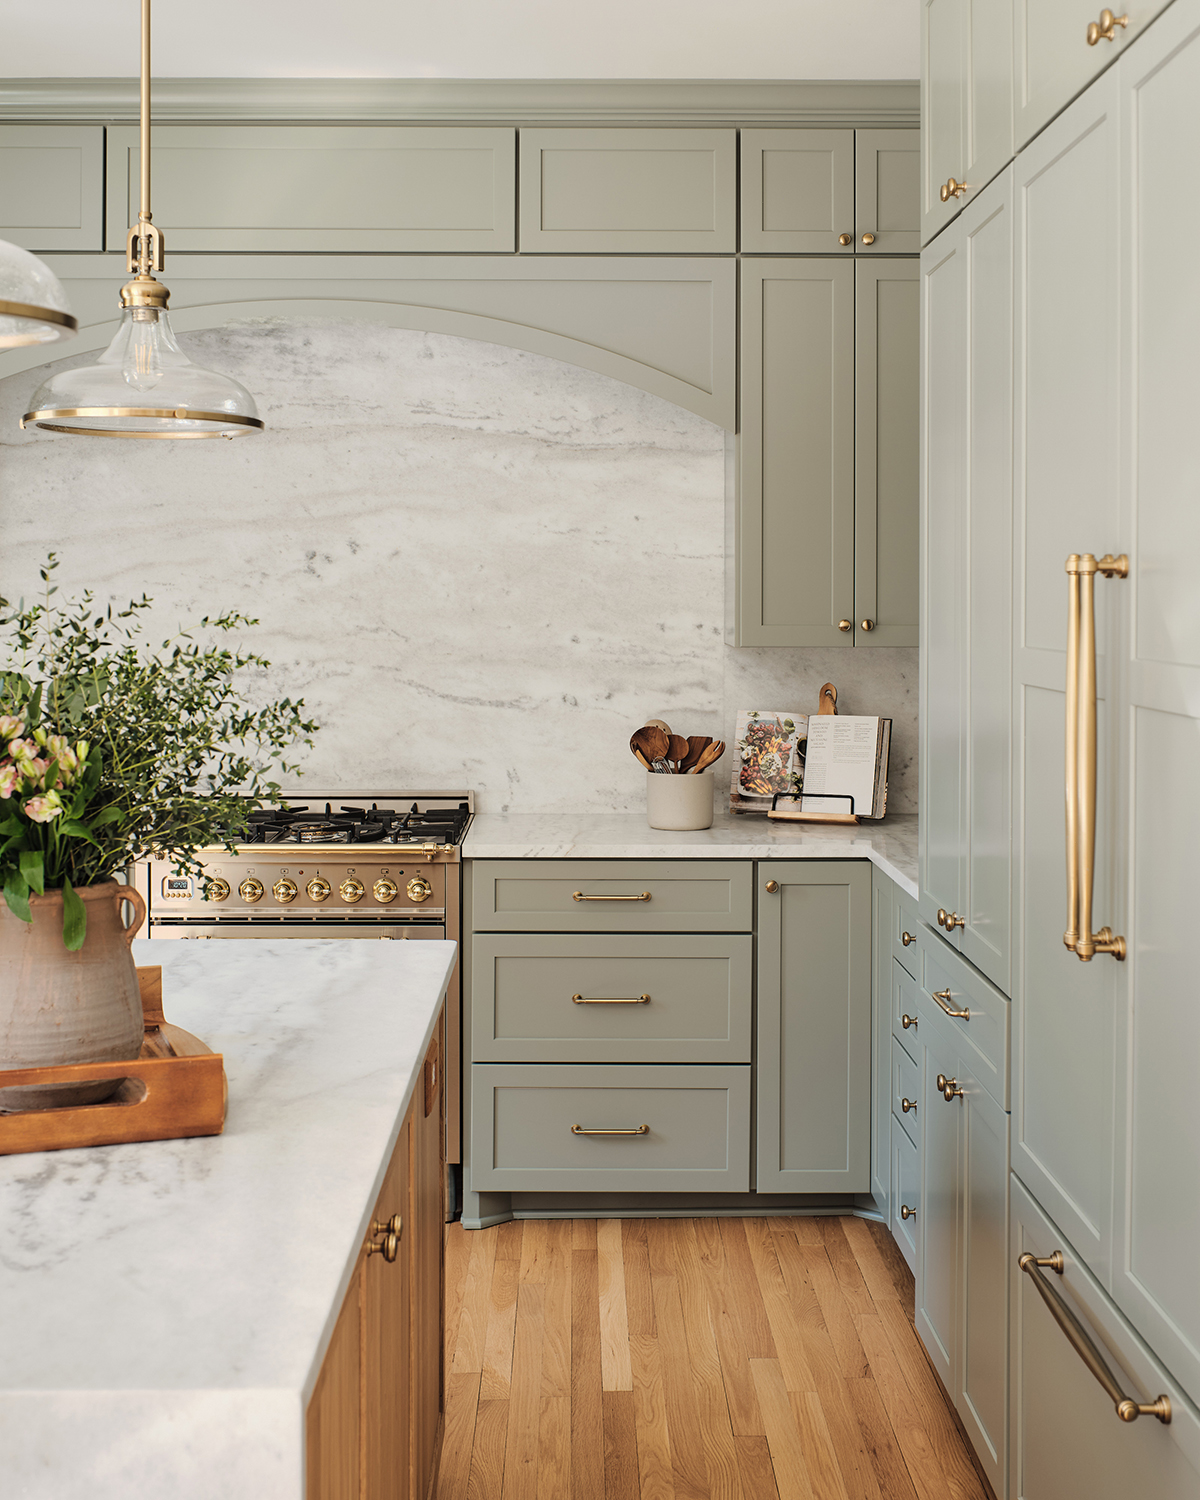 marble backsplash - green kitchen cabinets